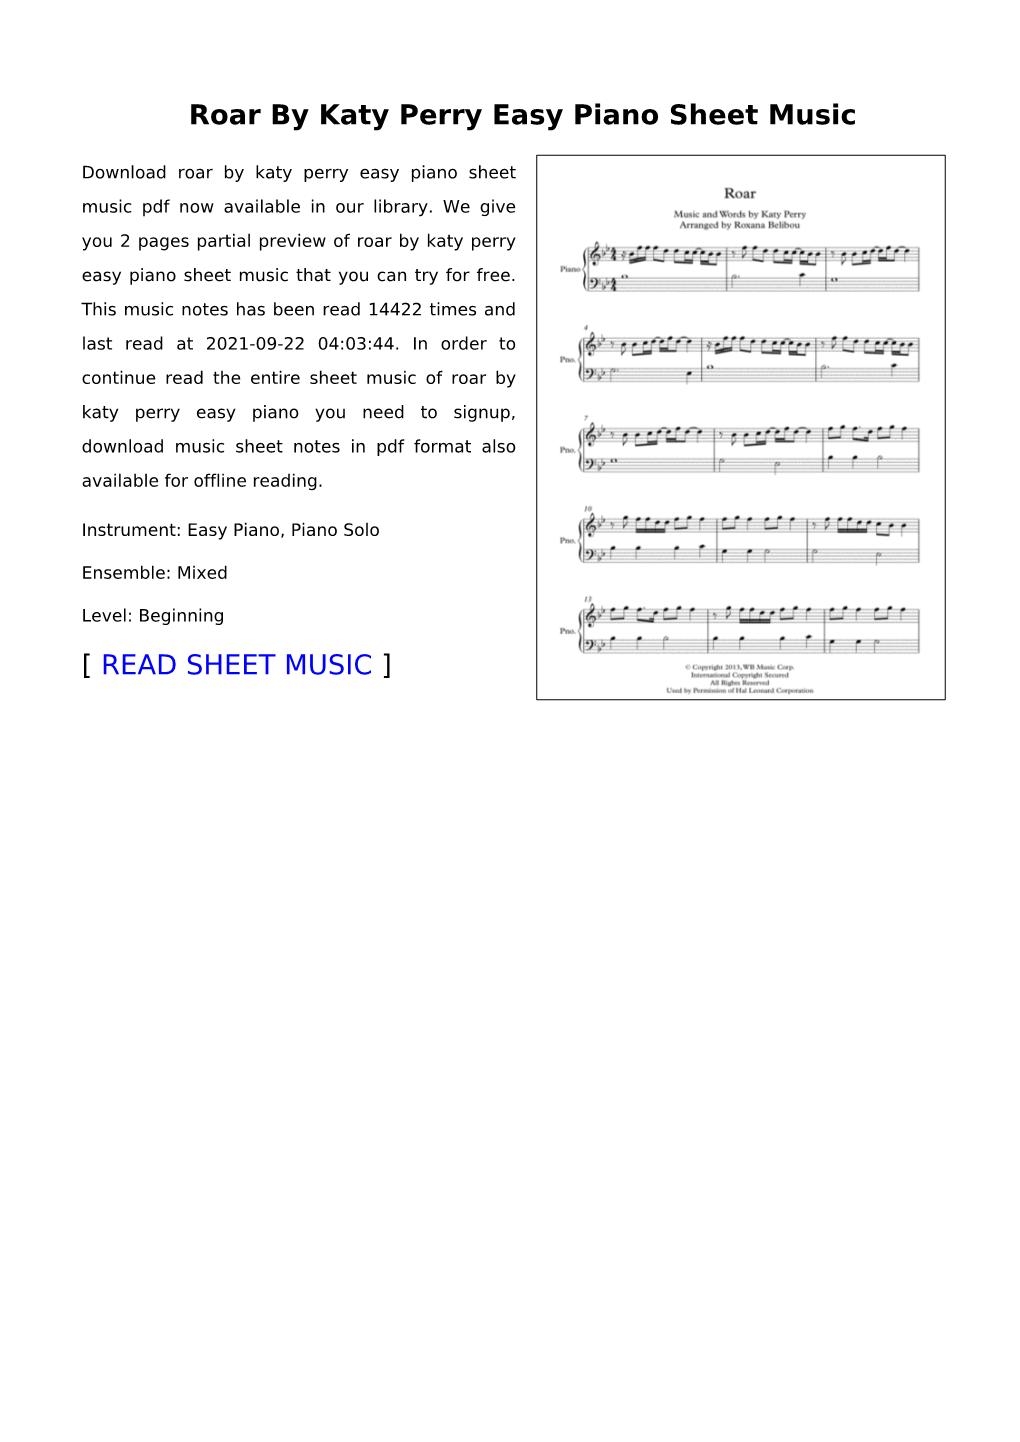 Roar by Katy Perry Easy Piano Sheet Music